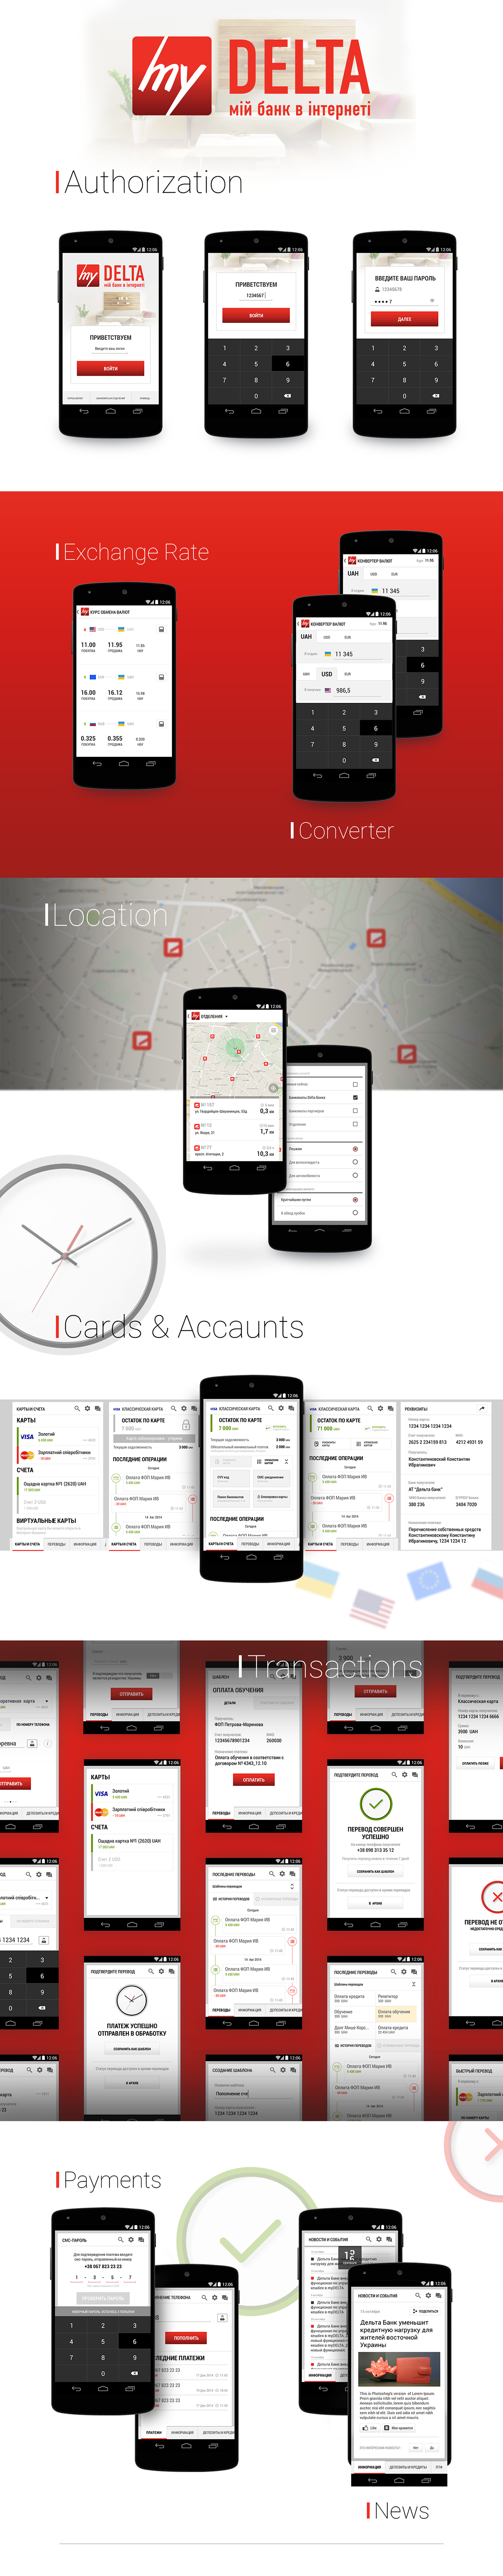 mobile UI design app Usability Analysis ui kit android design motion design mobile UX design app2world